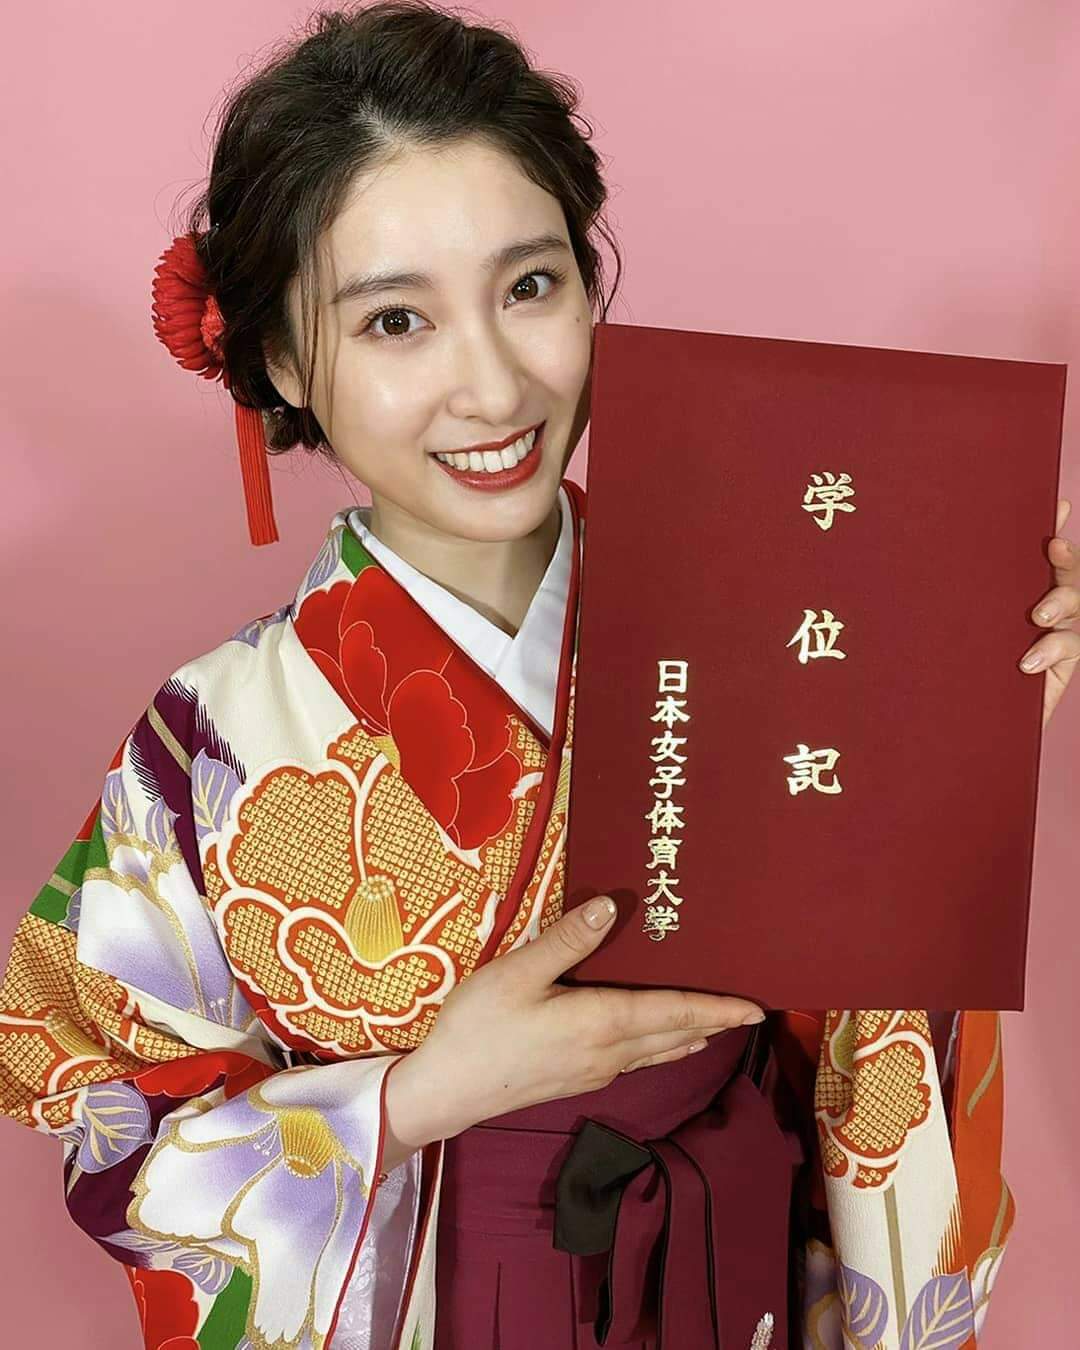 Tao Tsuchiya fun facts - Tao Tsuchiya in a kimono and holding her university graduation certificate